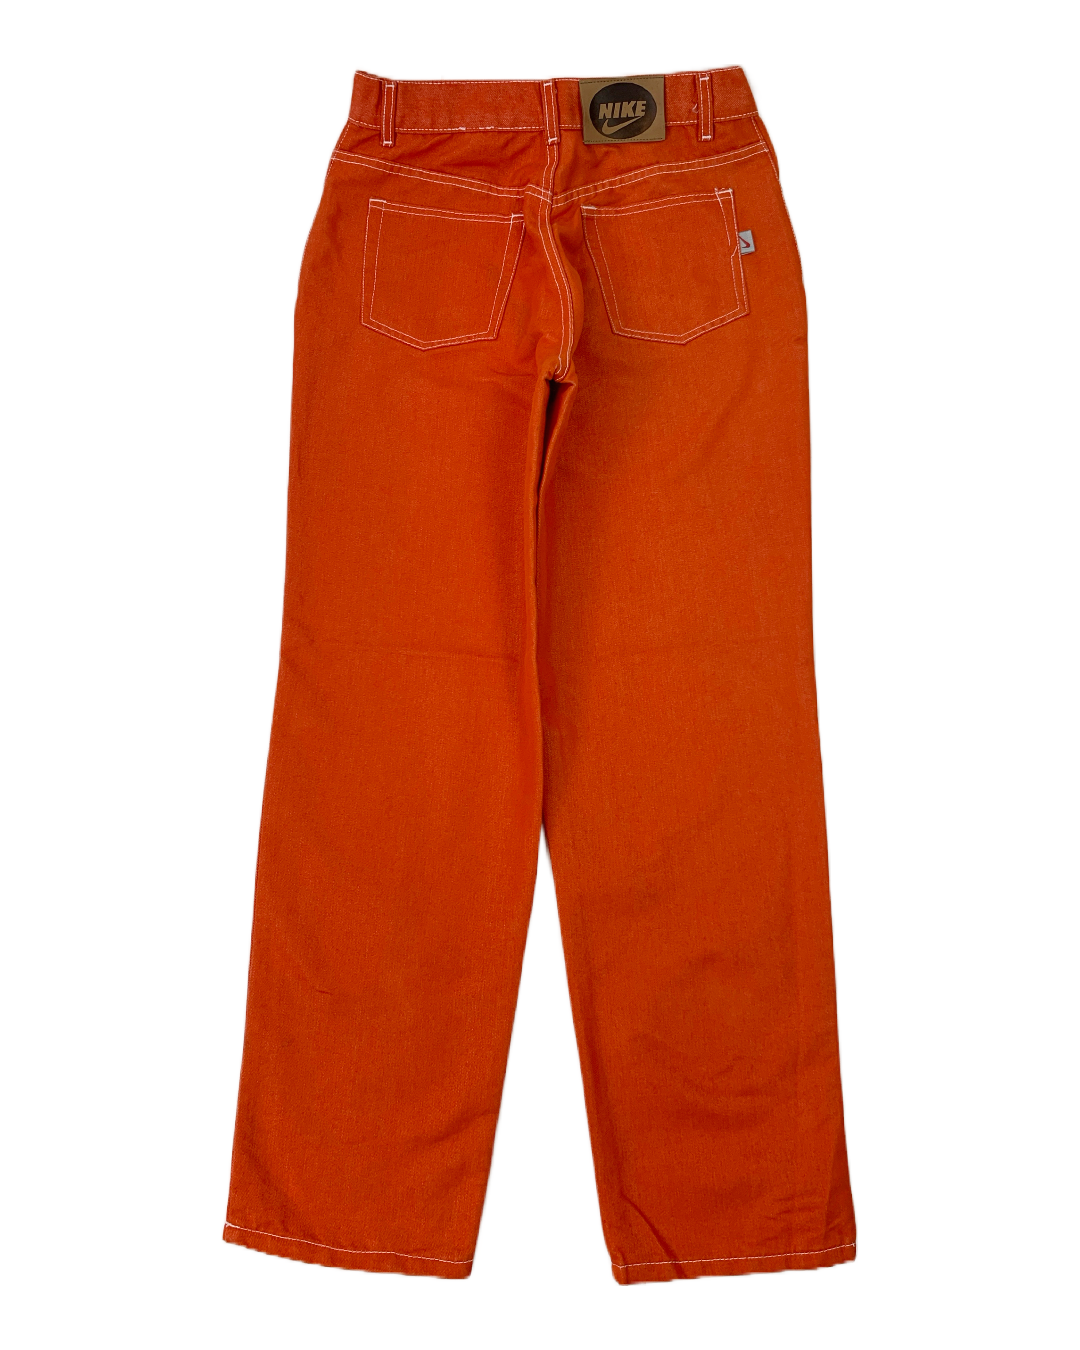 Nike Vintage Naranja Jeans - 29